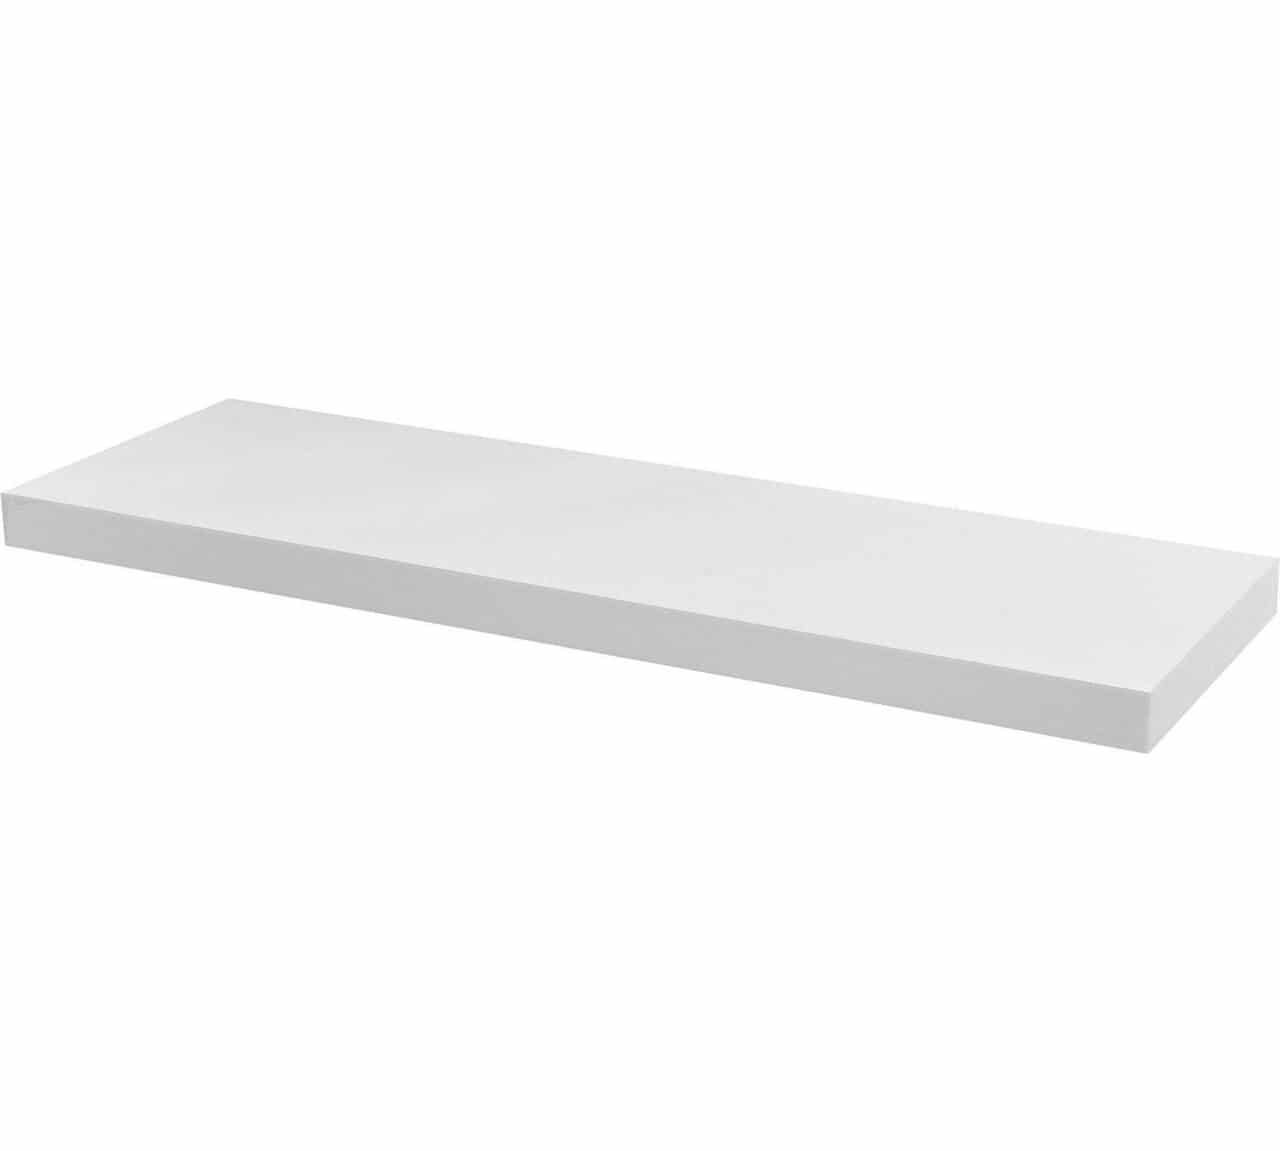 White Floating Shelf - 300mm x 140mm